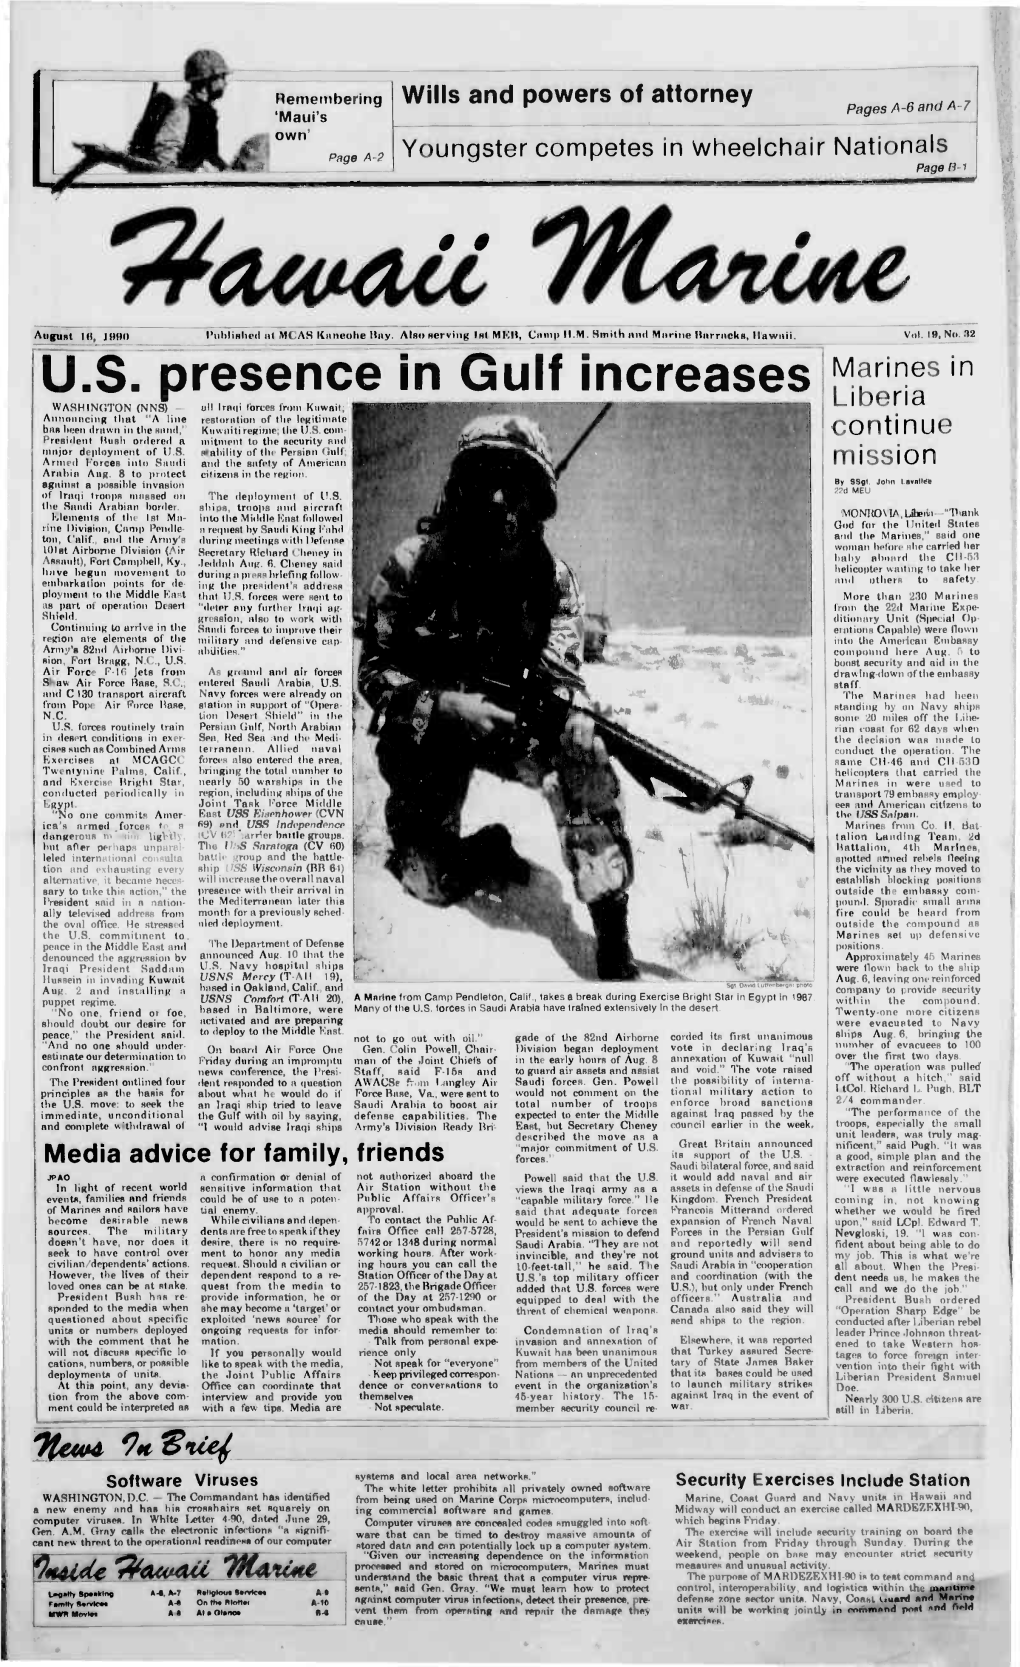 U.S. Presence in Gulf Increases